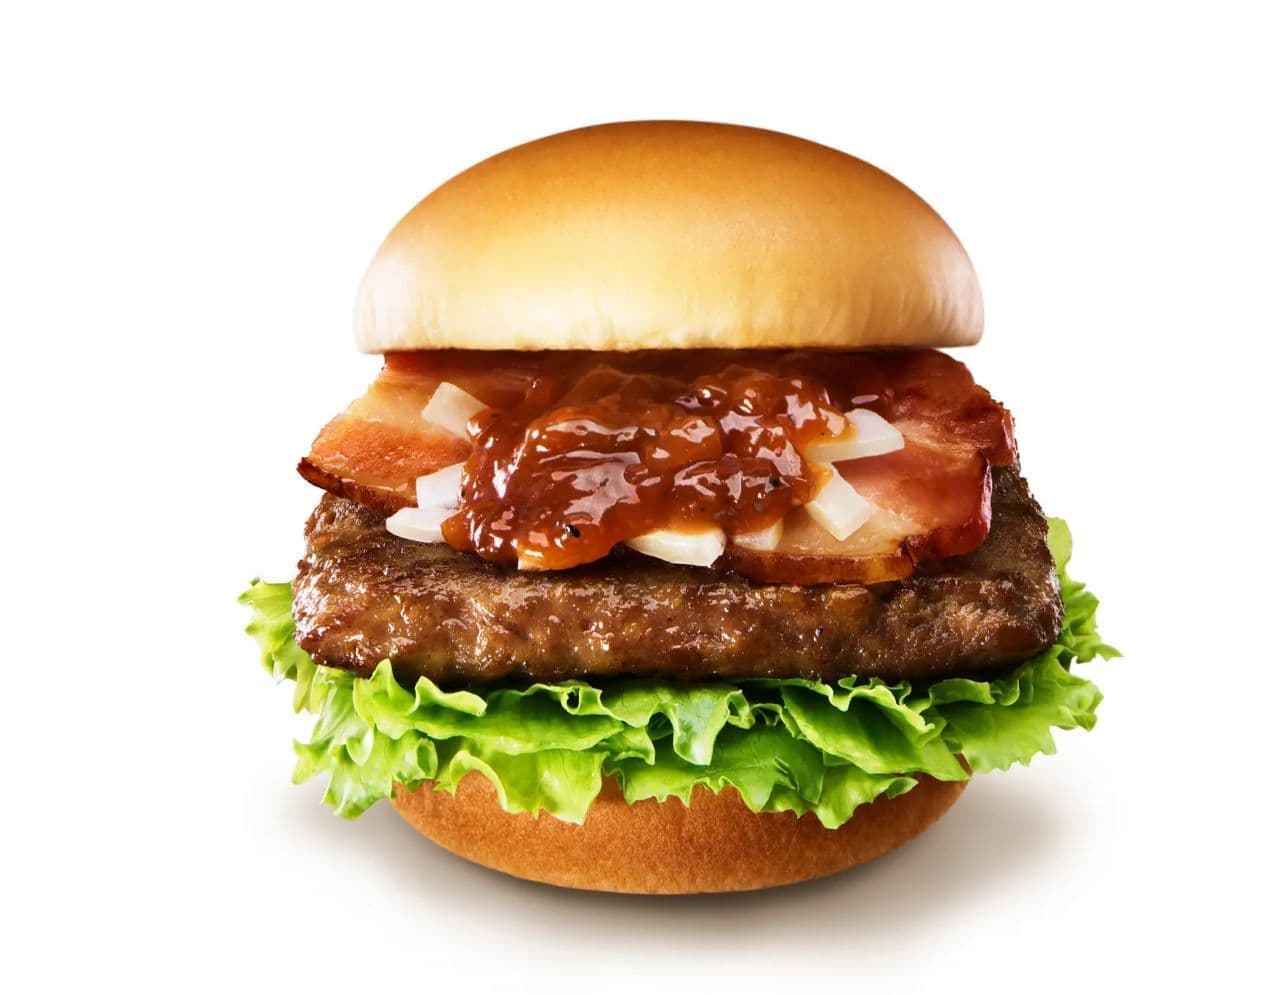 Mos Burger "One Head Black Wagyu Beef Burger with Shaliapin Sauce - Truffle Flavor".